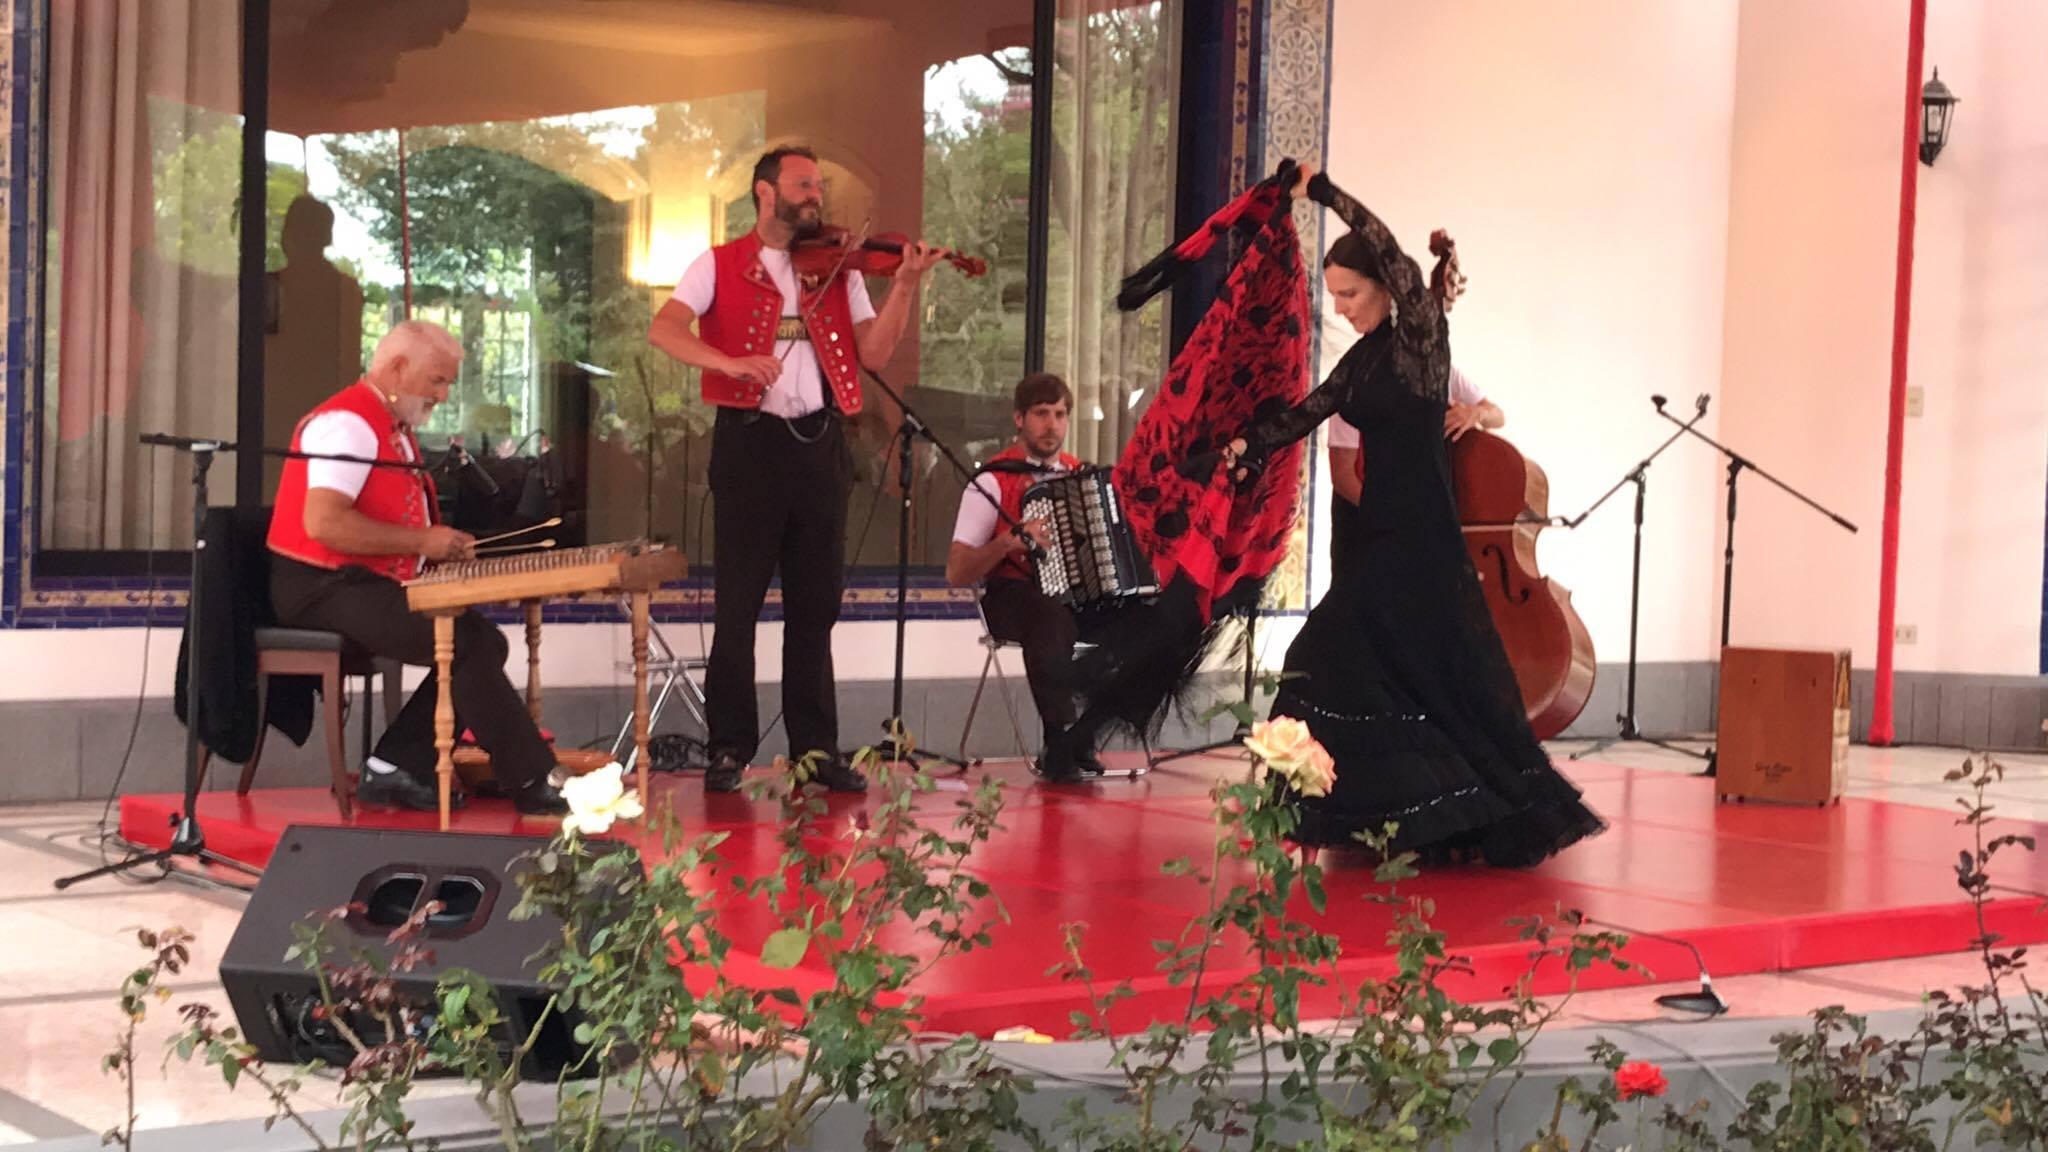 Bailaora suiza baila al compás de un cuarteto de música folclórica suiza